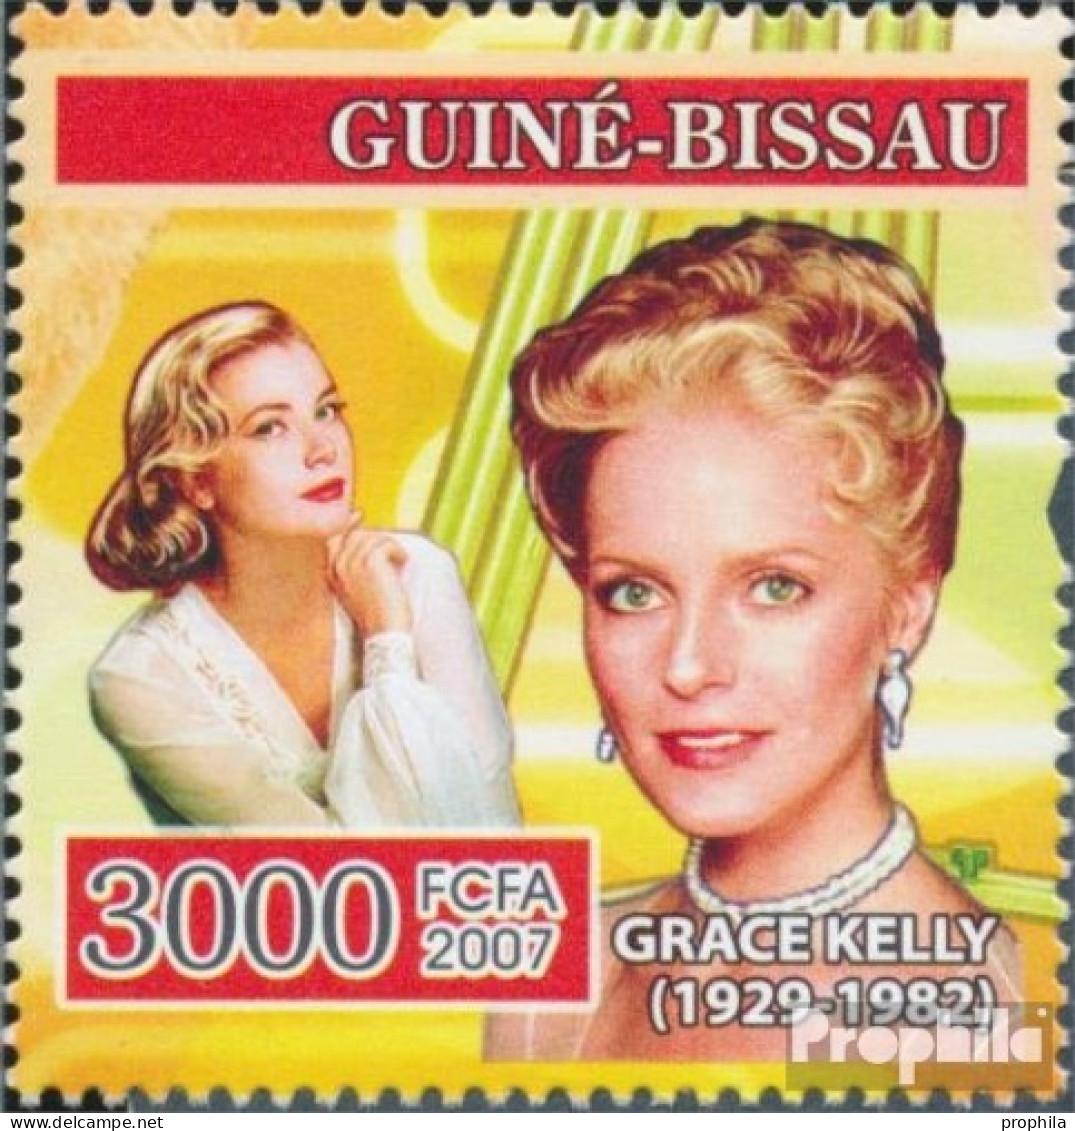 Guinea-Bissau 3495 (kompl. Ausgabe) Postfrisch 2007 Filmschauspieler - Guinée-Bissau